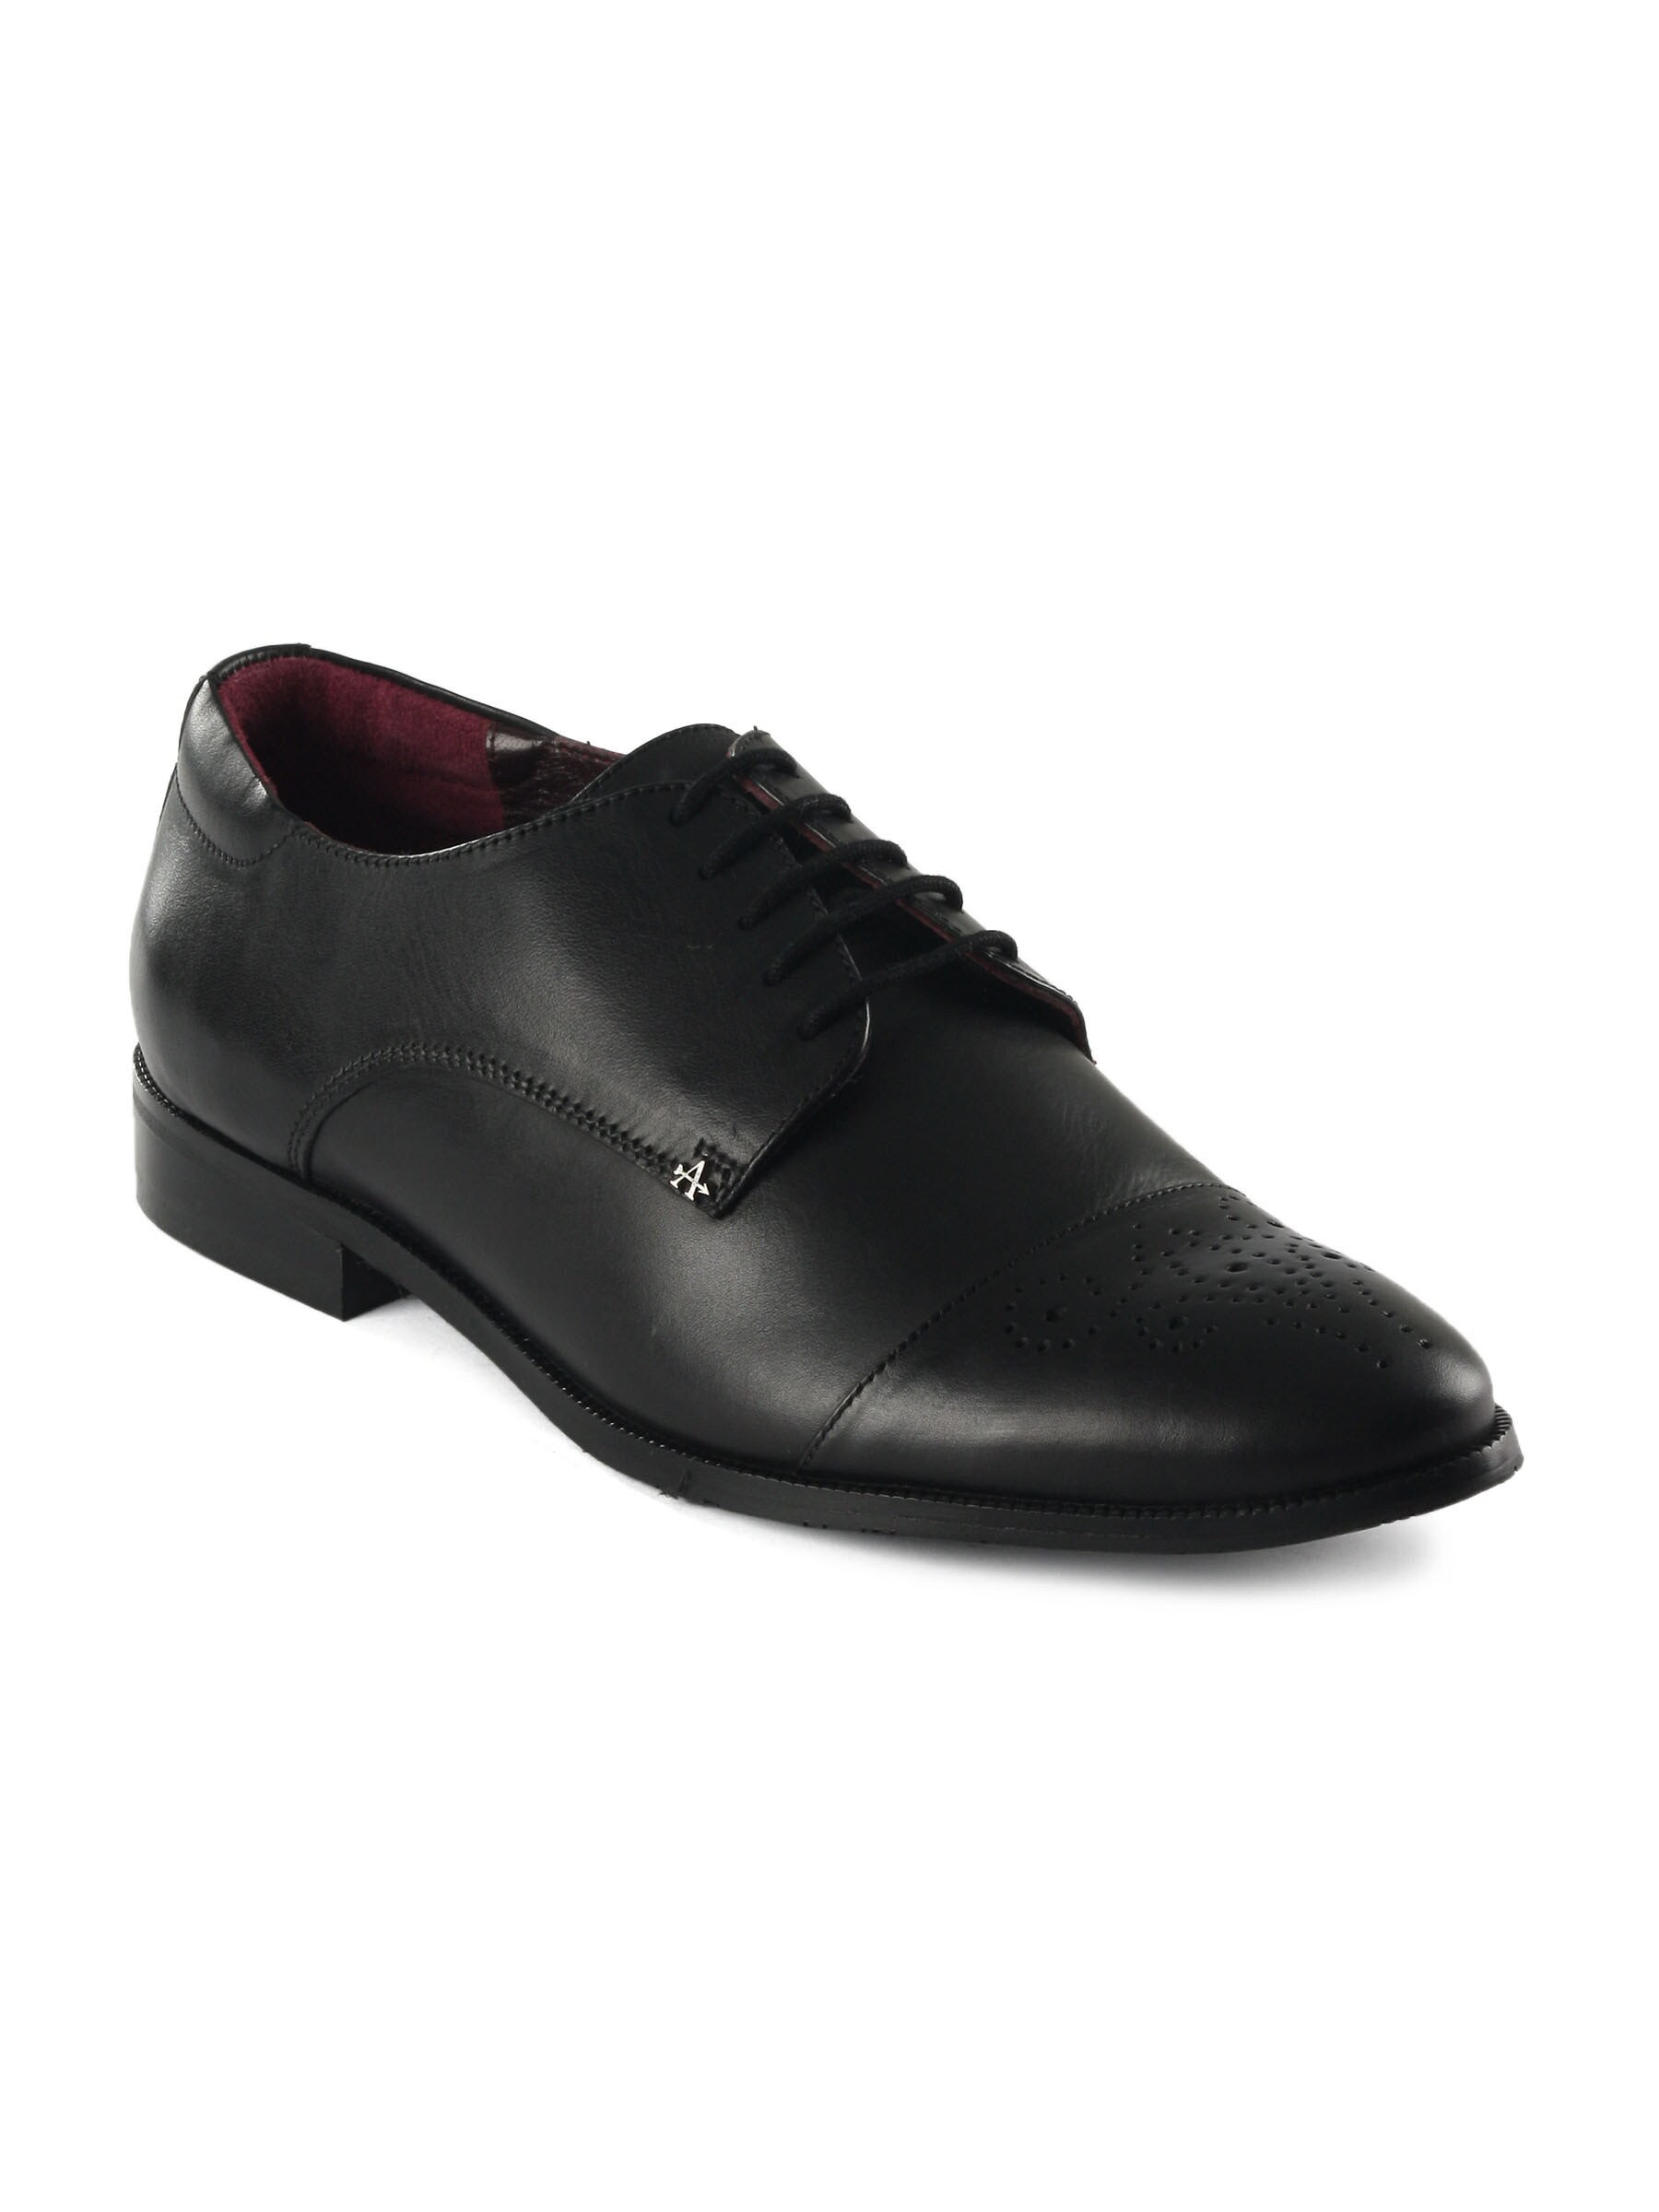 Arrow Men Formal Black Shoes